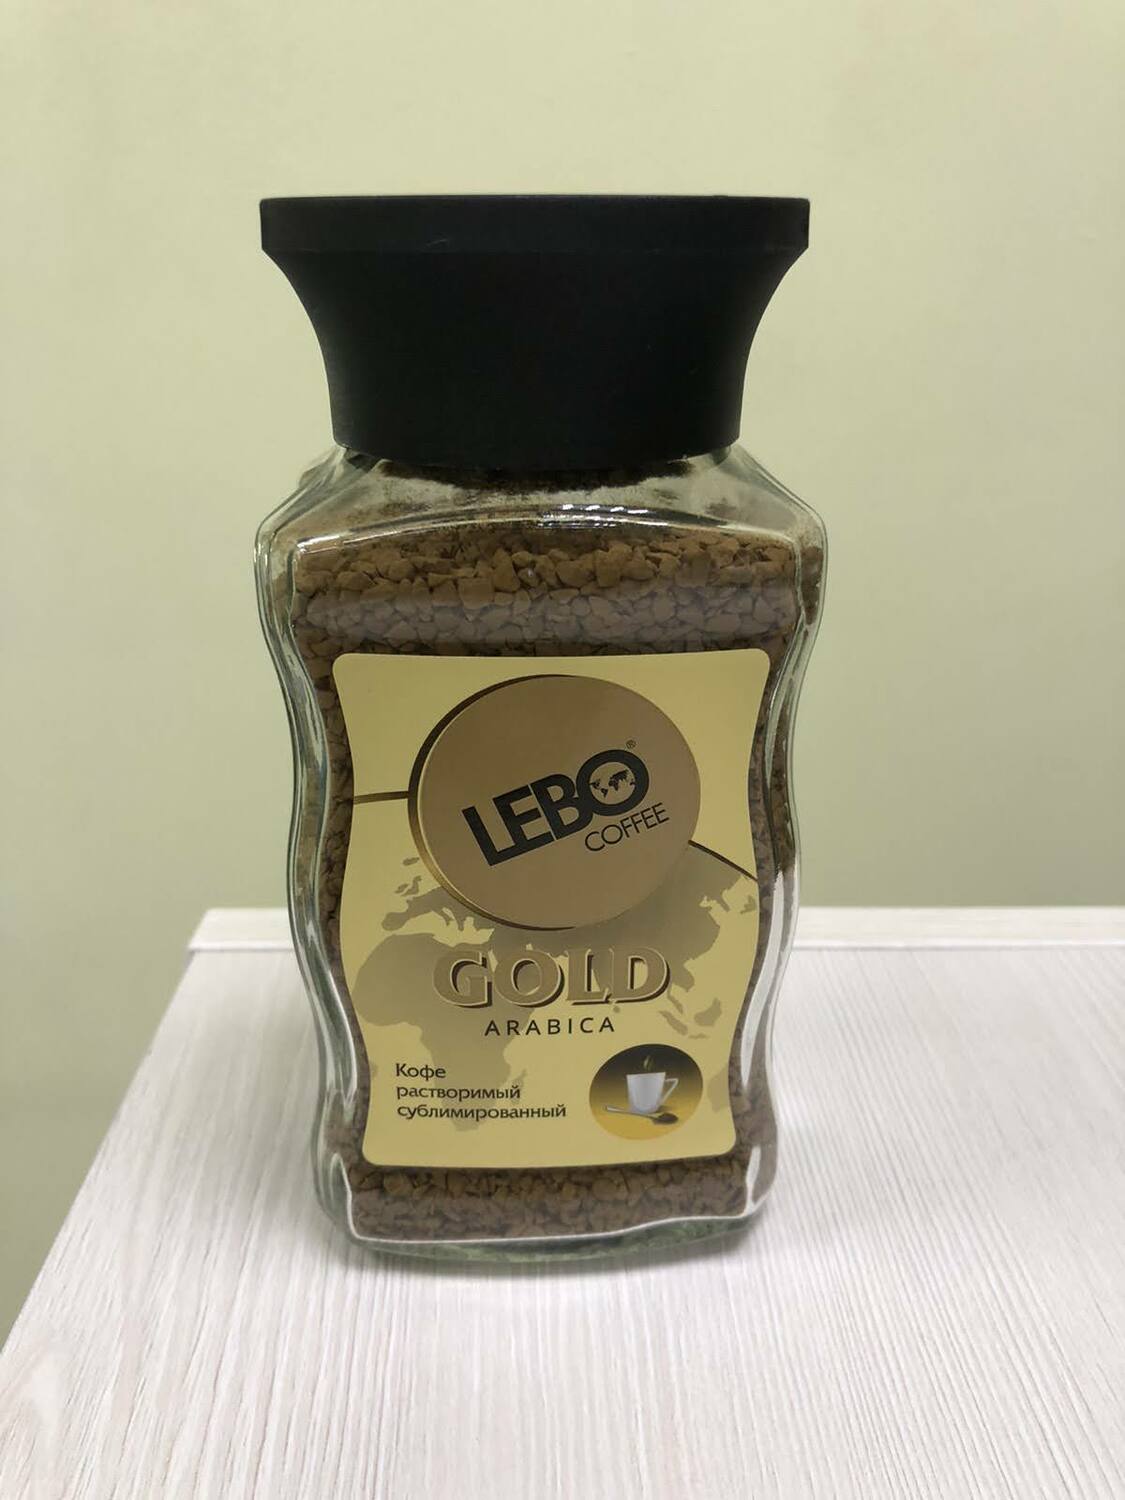 Lebo coffee